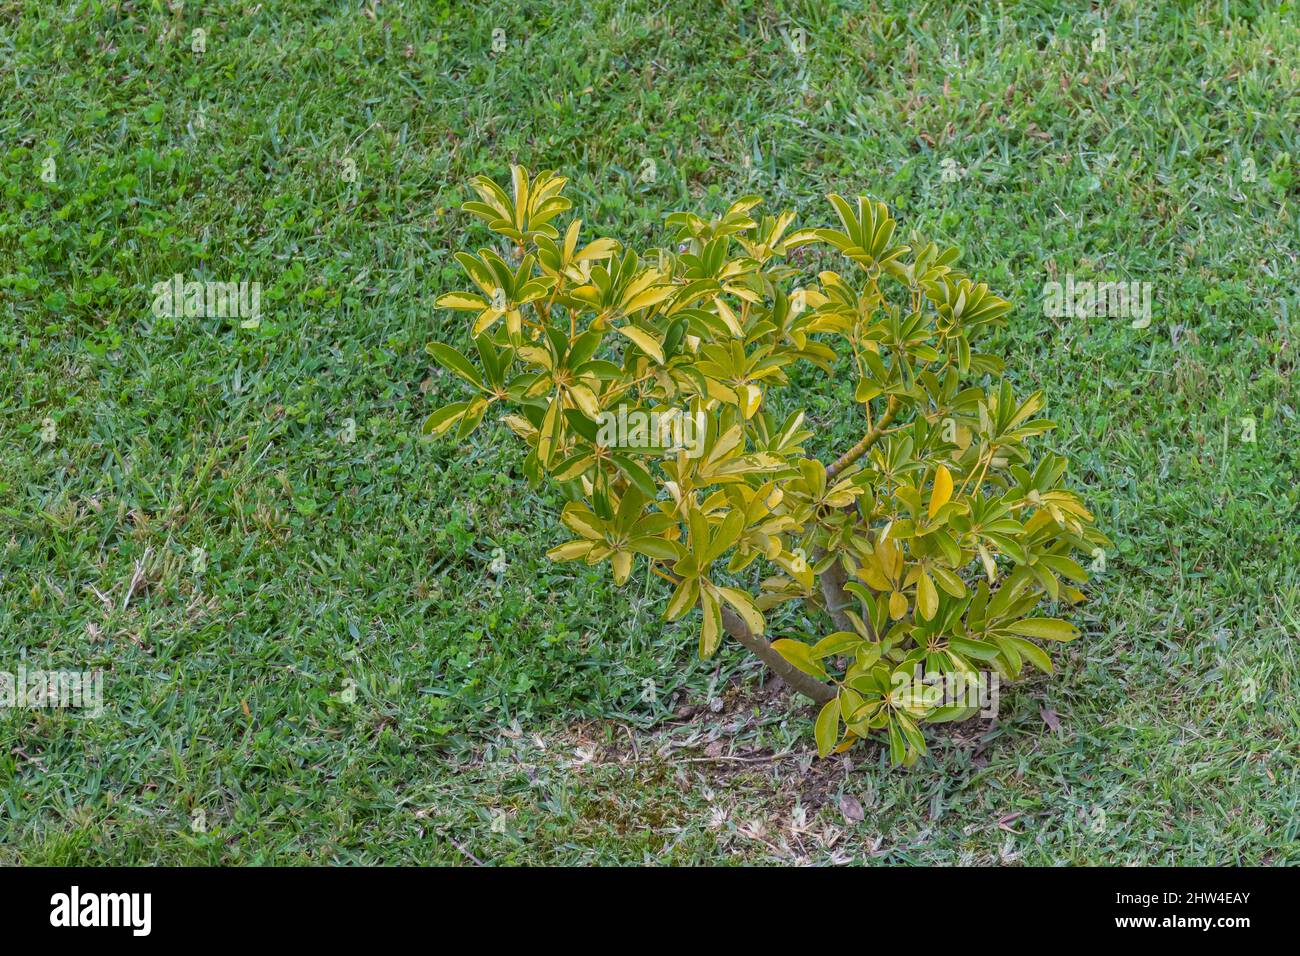 schefflera arboricola variegated umbrella tree surrounded by grass in outdoor garden Stock Photo